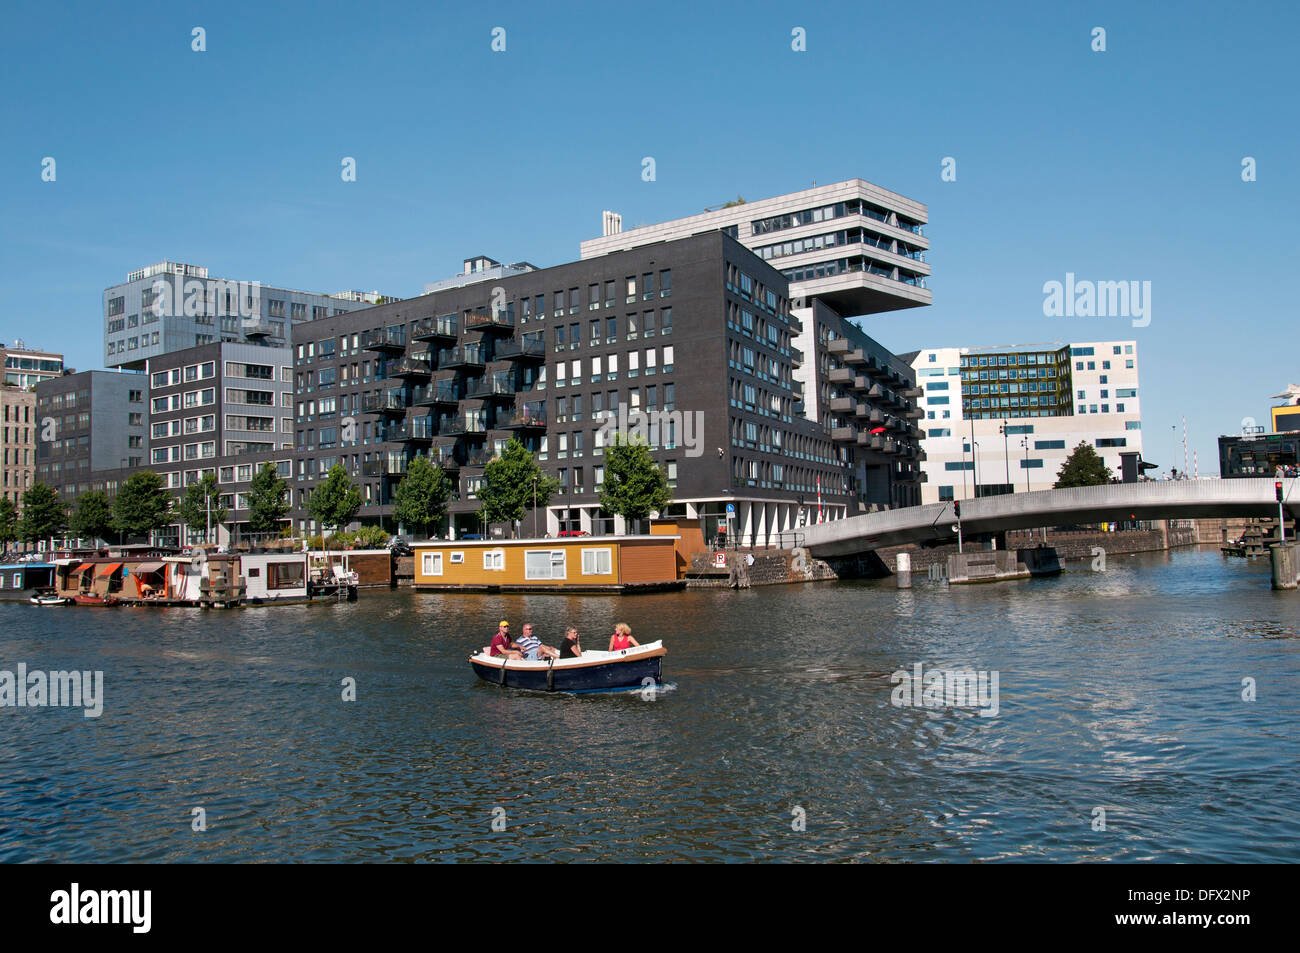 Westerdok Amsterdam Paesi Bassi Olandese moderno city town house boat houseboat Foto Stock